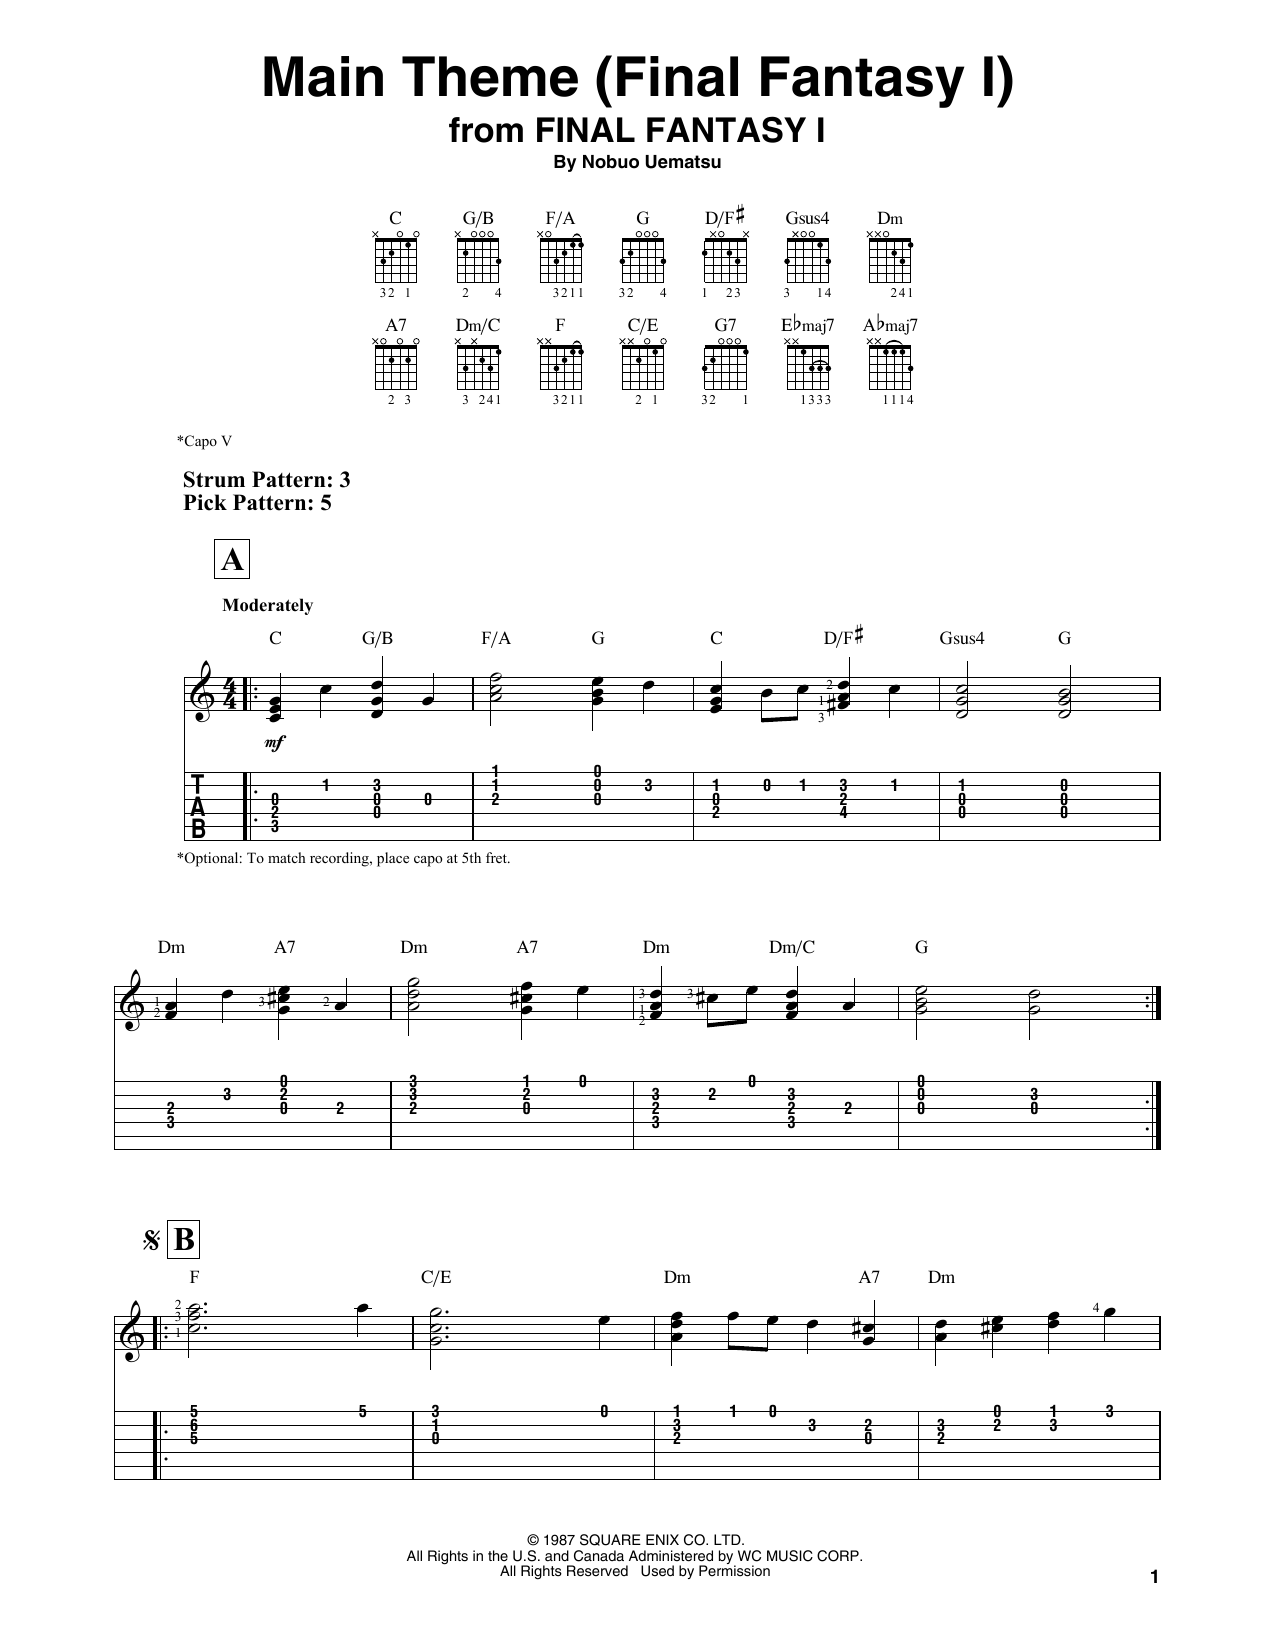 Nobuo Uematsu Main Theme (Final Fantasy I) sheet music notes and chords arranged for Easy Guitar Tab